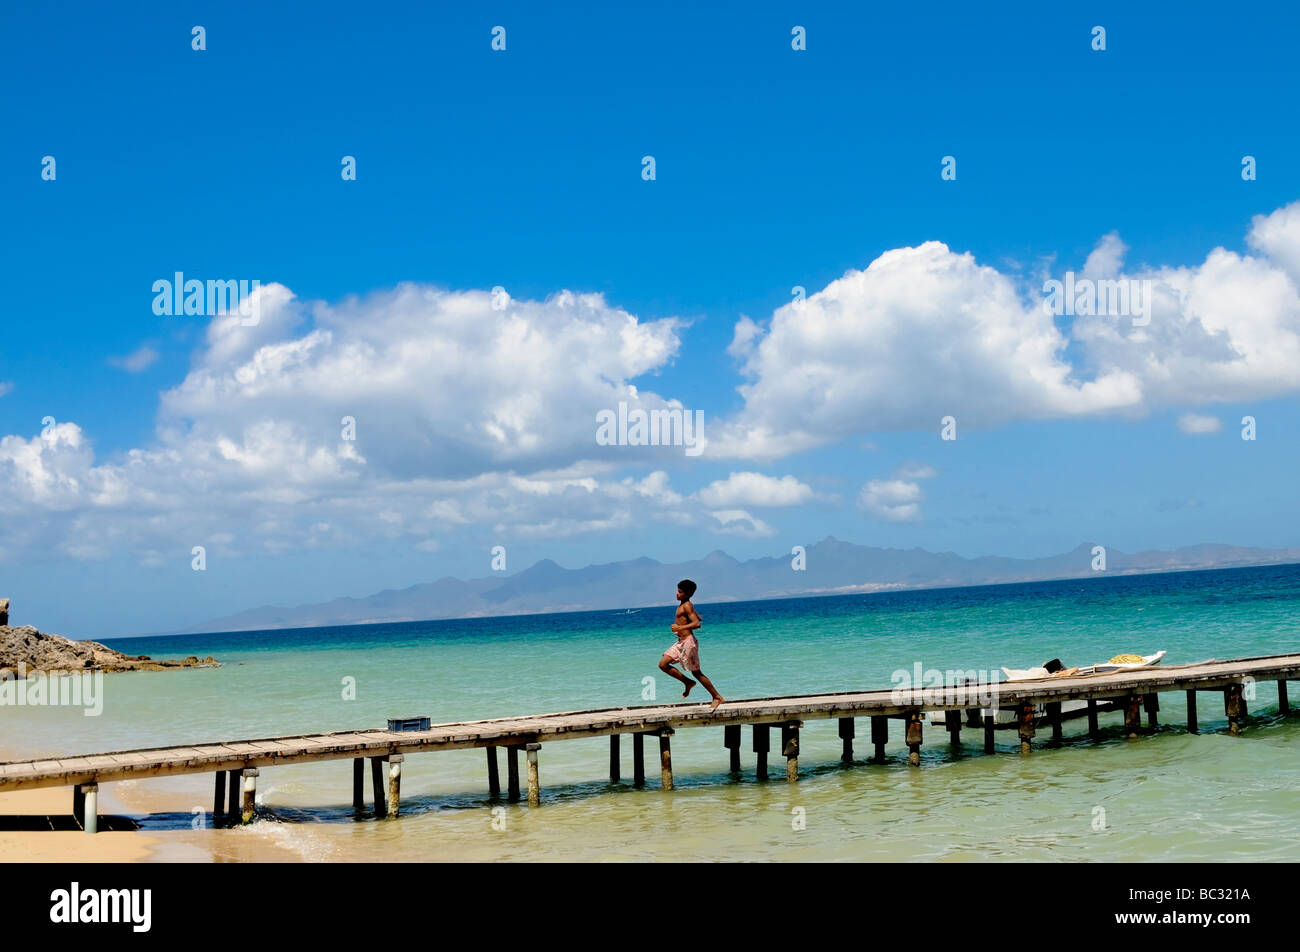 Young boy runs down dock on the Caribbean Island of Cubagua in Venezuela. Stock Photo